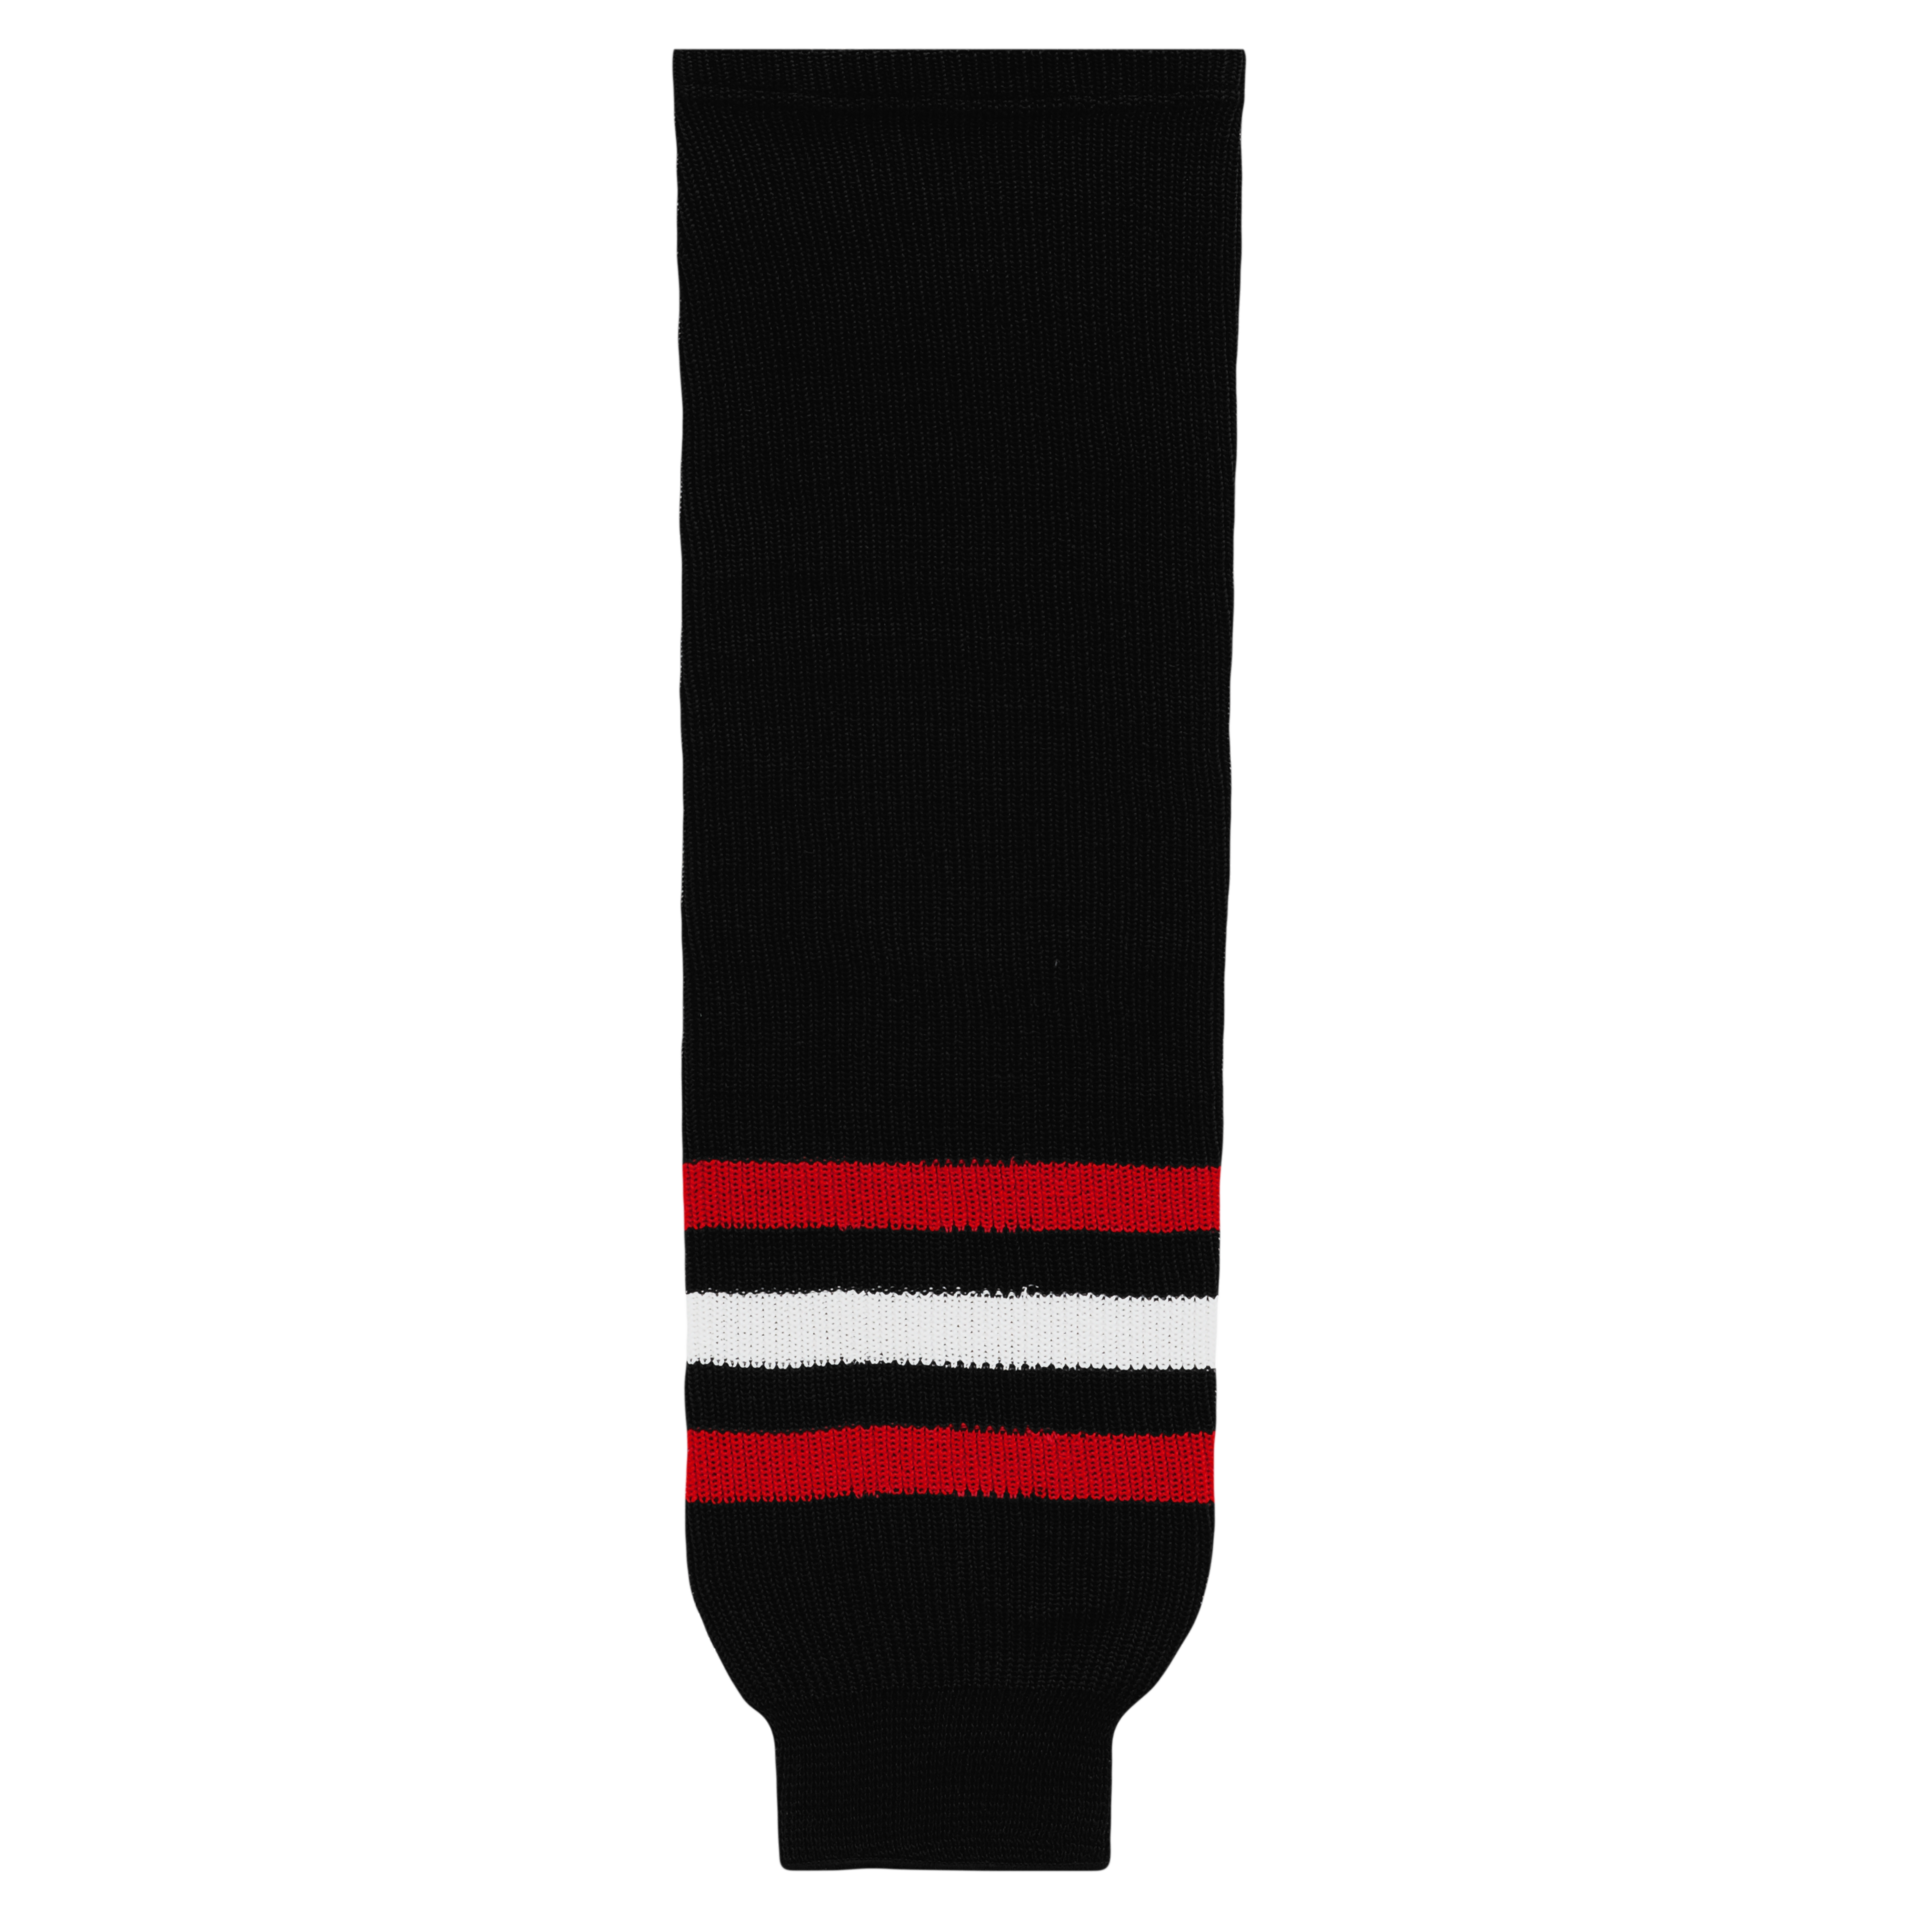 H550B-CHI670B Chicago Blackhawks Blank Hockey Jerseys –